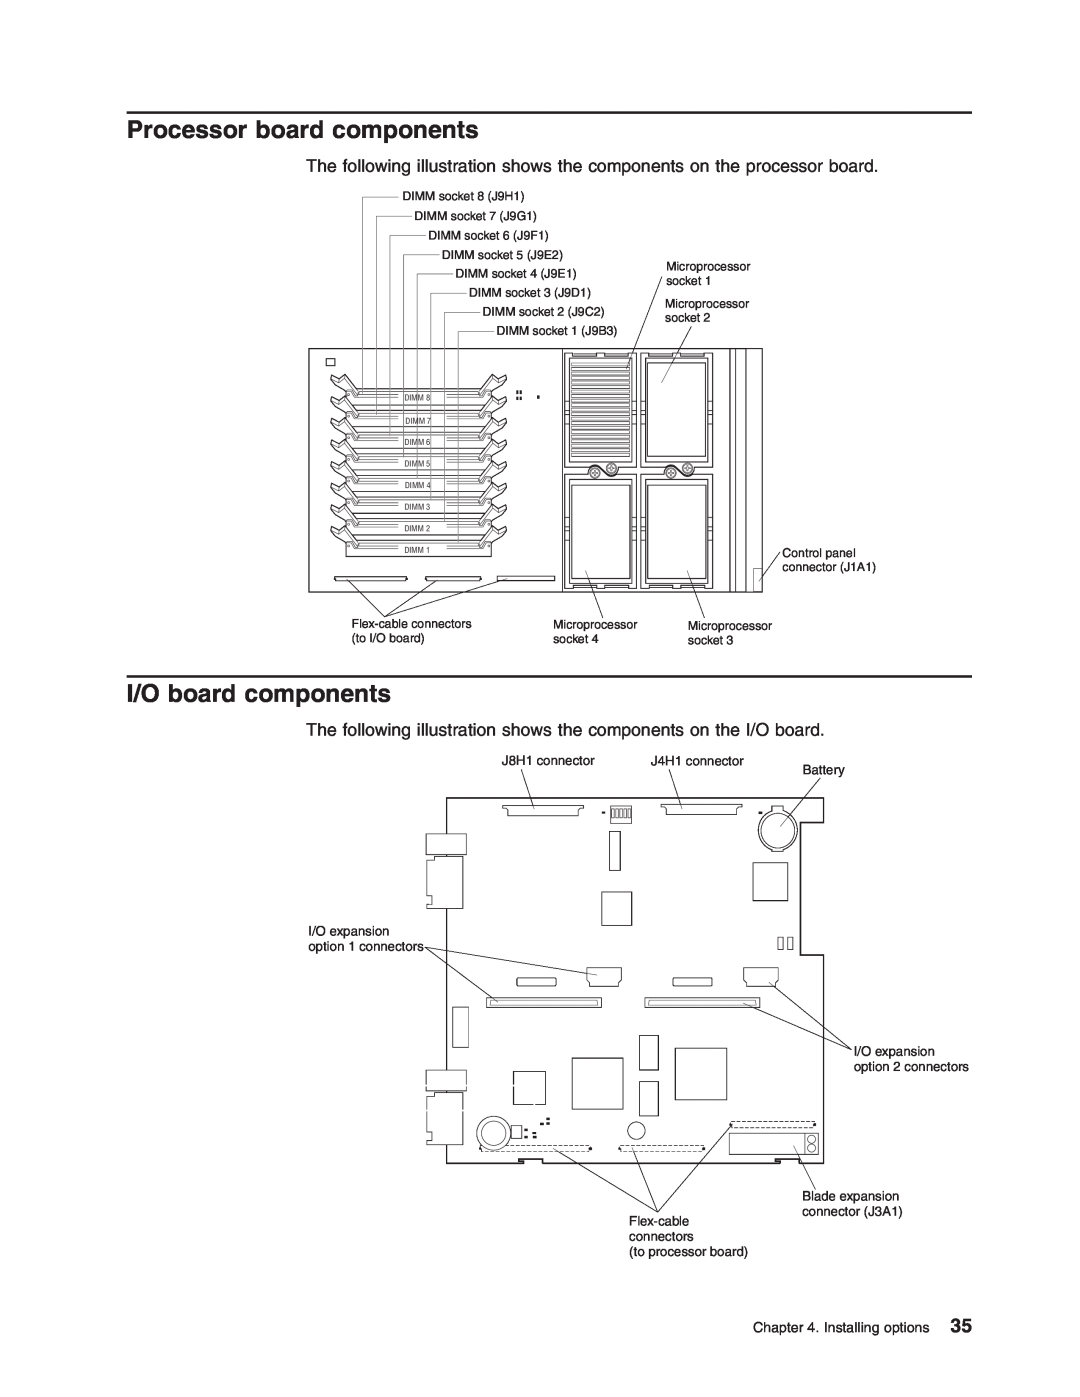 IBM HS40 manual Processor board components, I/O board components, Installing options, J8H1 connector, J4H1 connector 